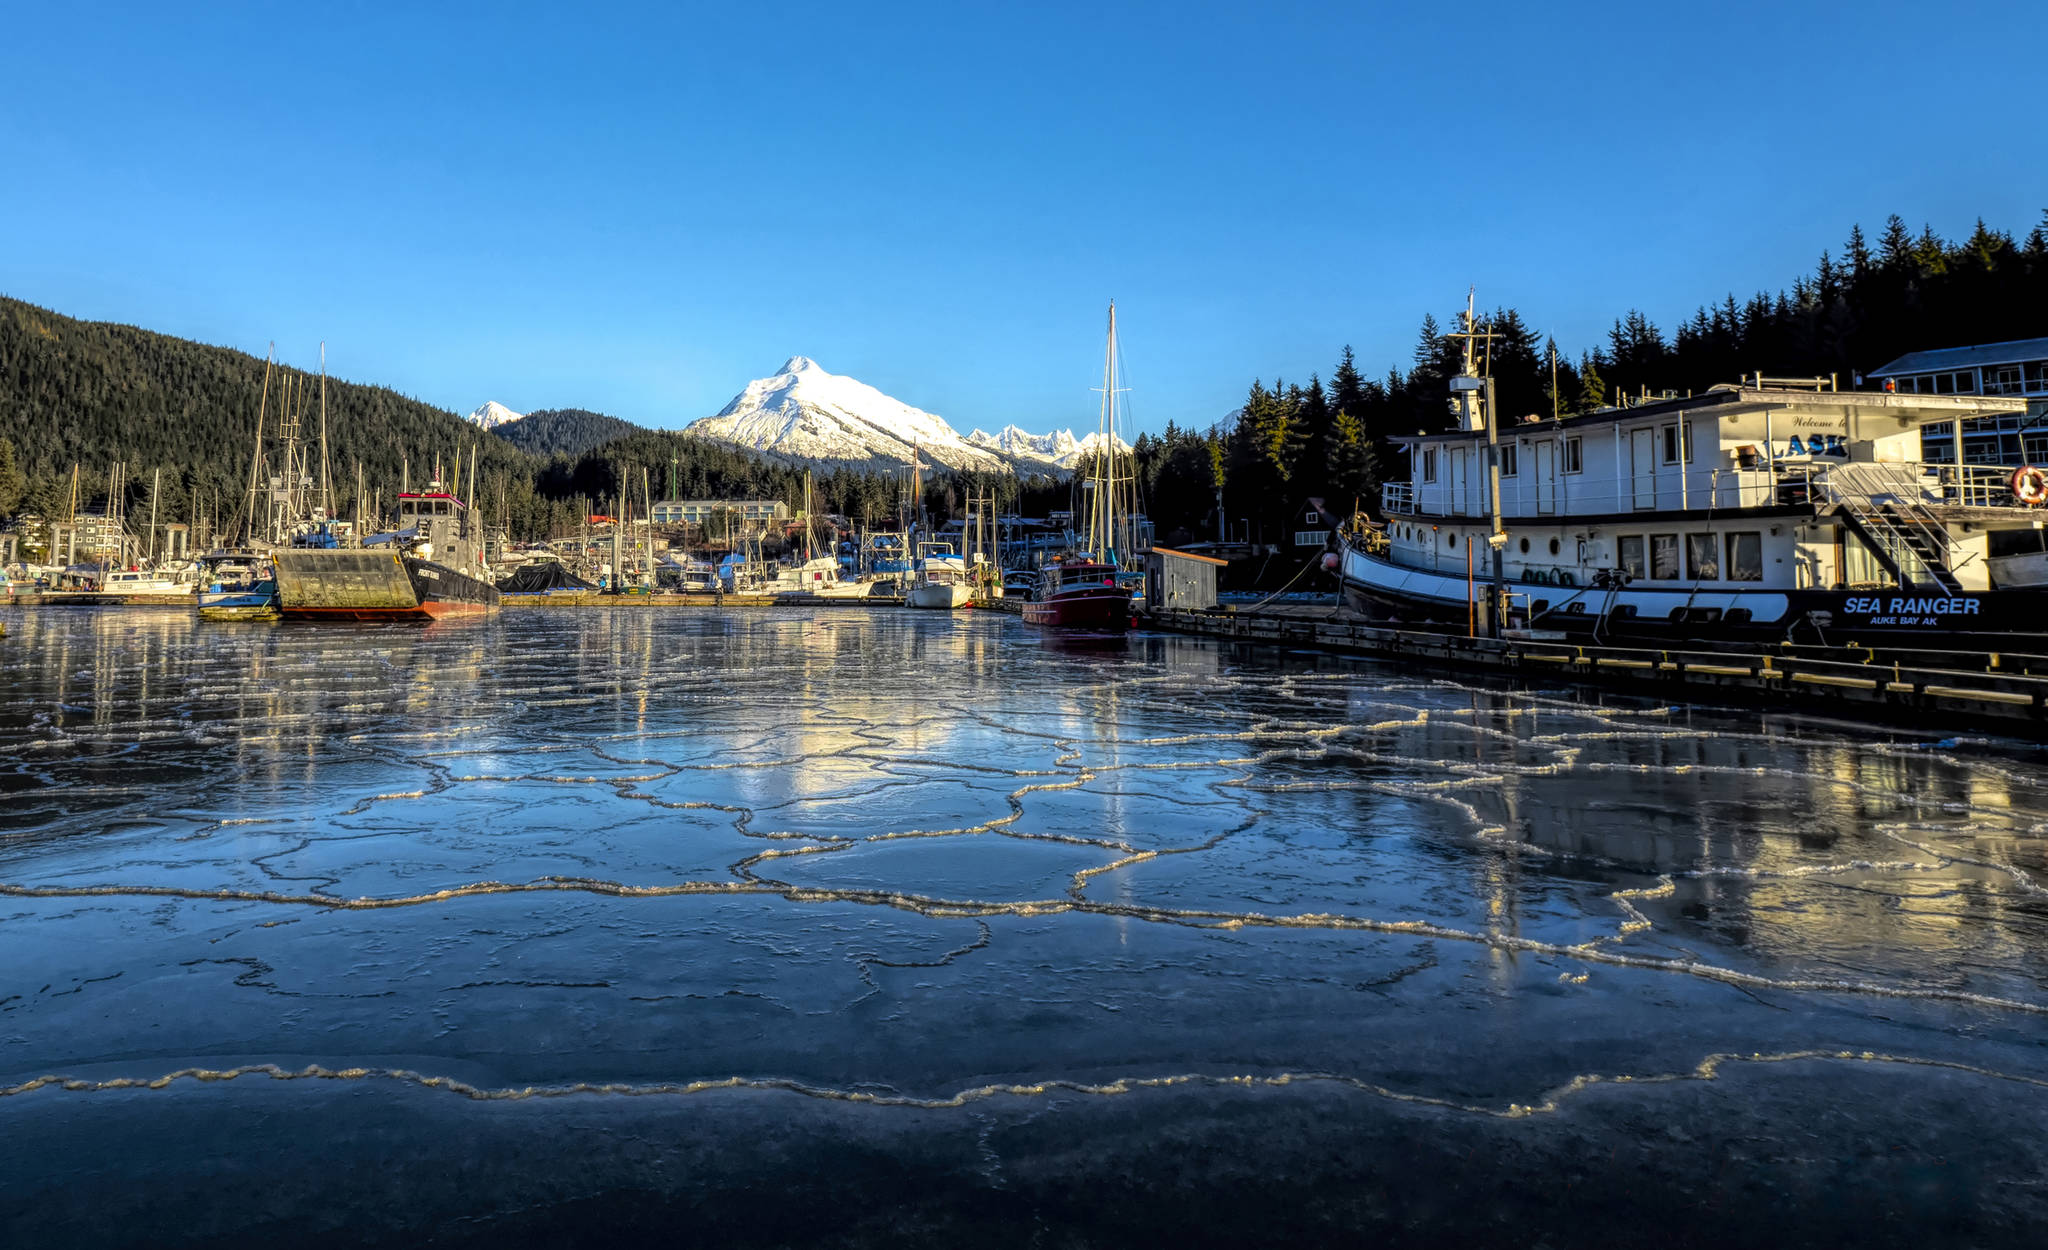 Frozen in Auke Bay on Feb. 3, 2019. (Courtesy Photo | Janice Gorle)